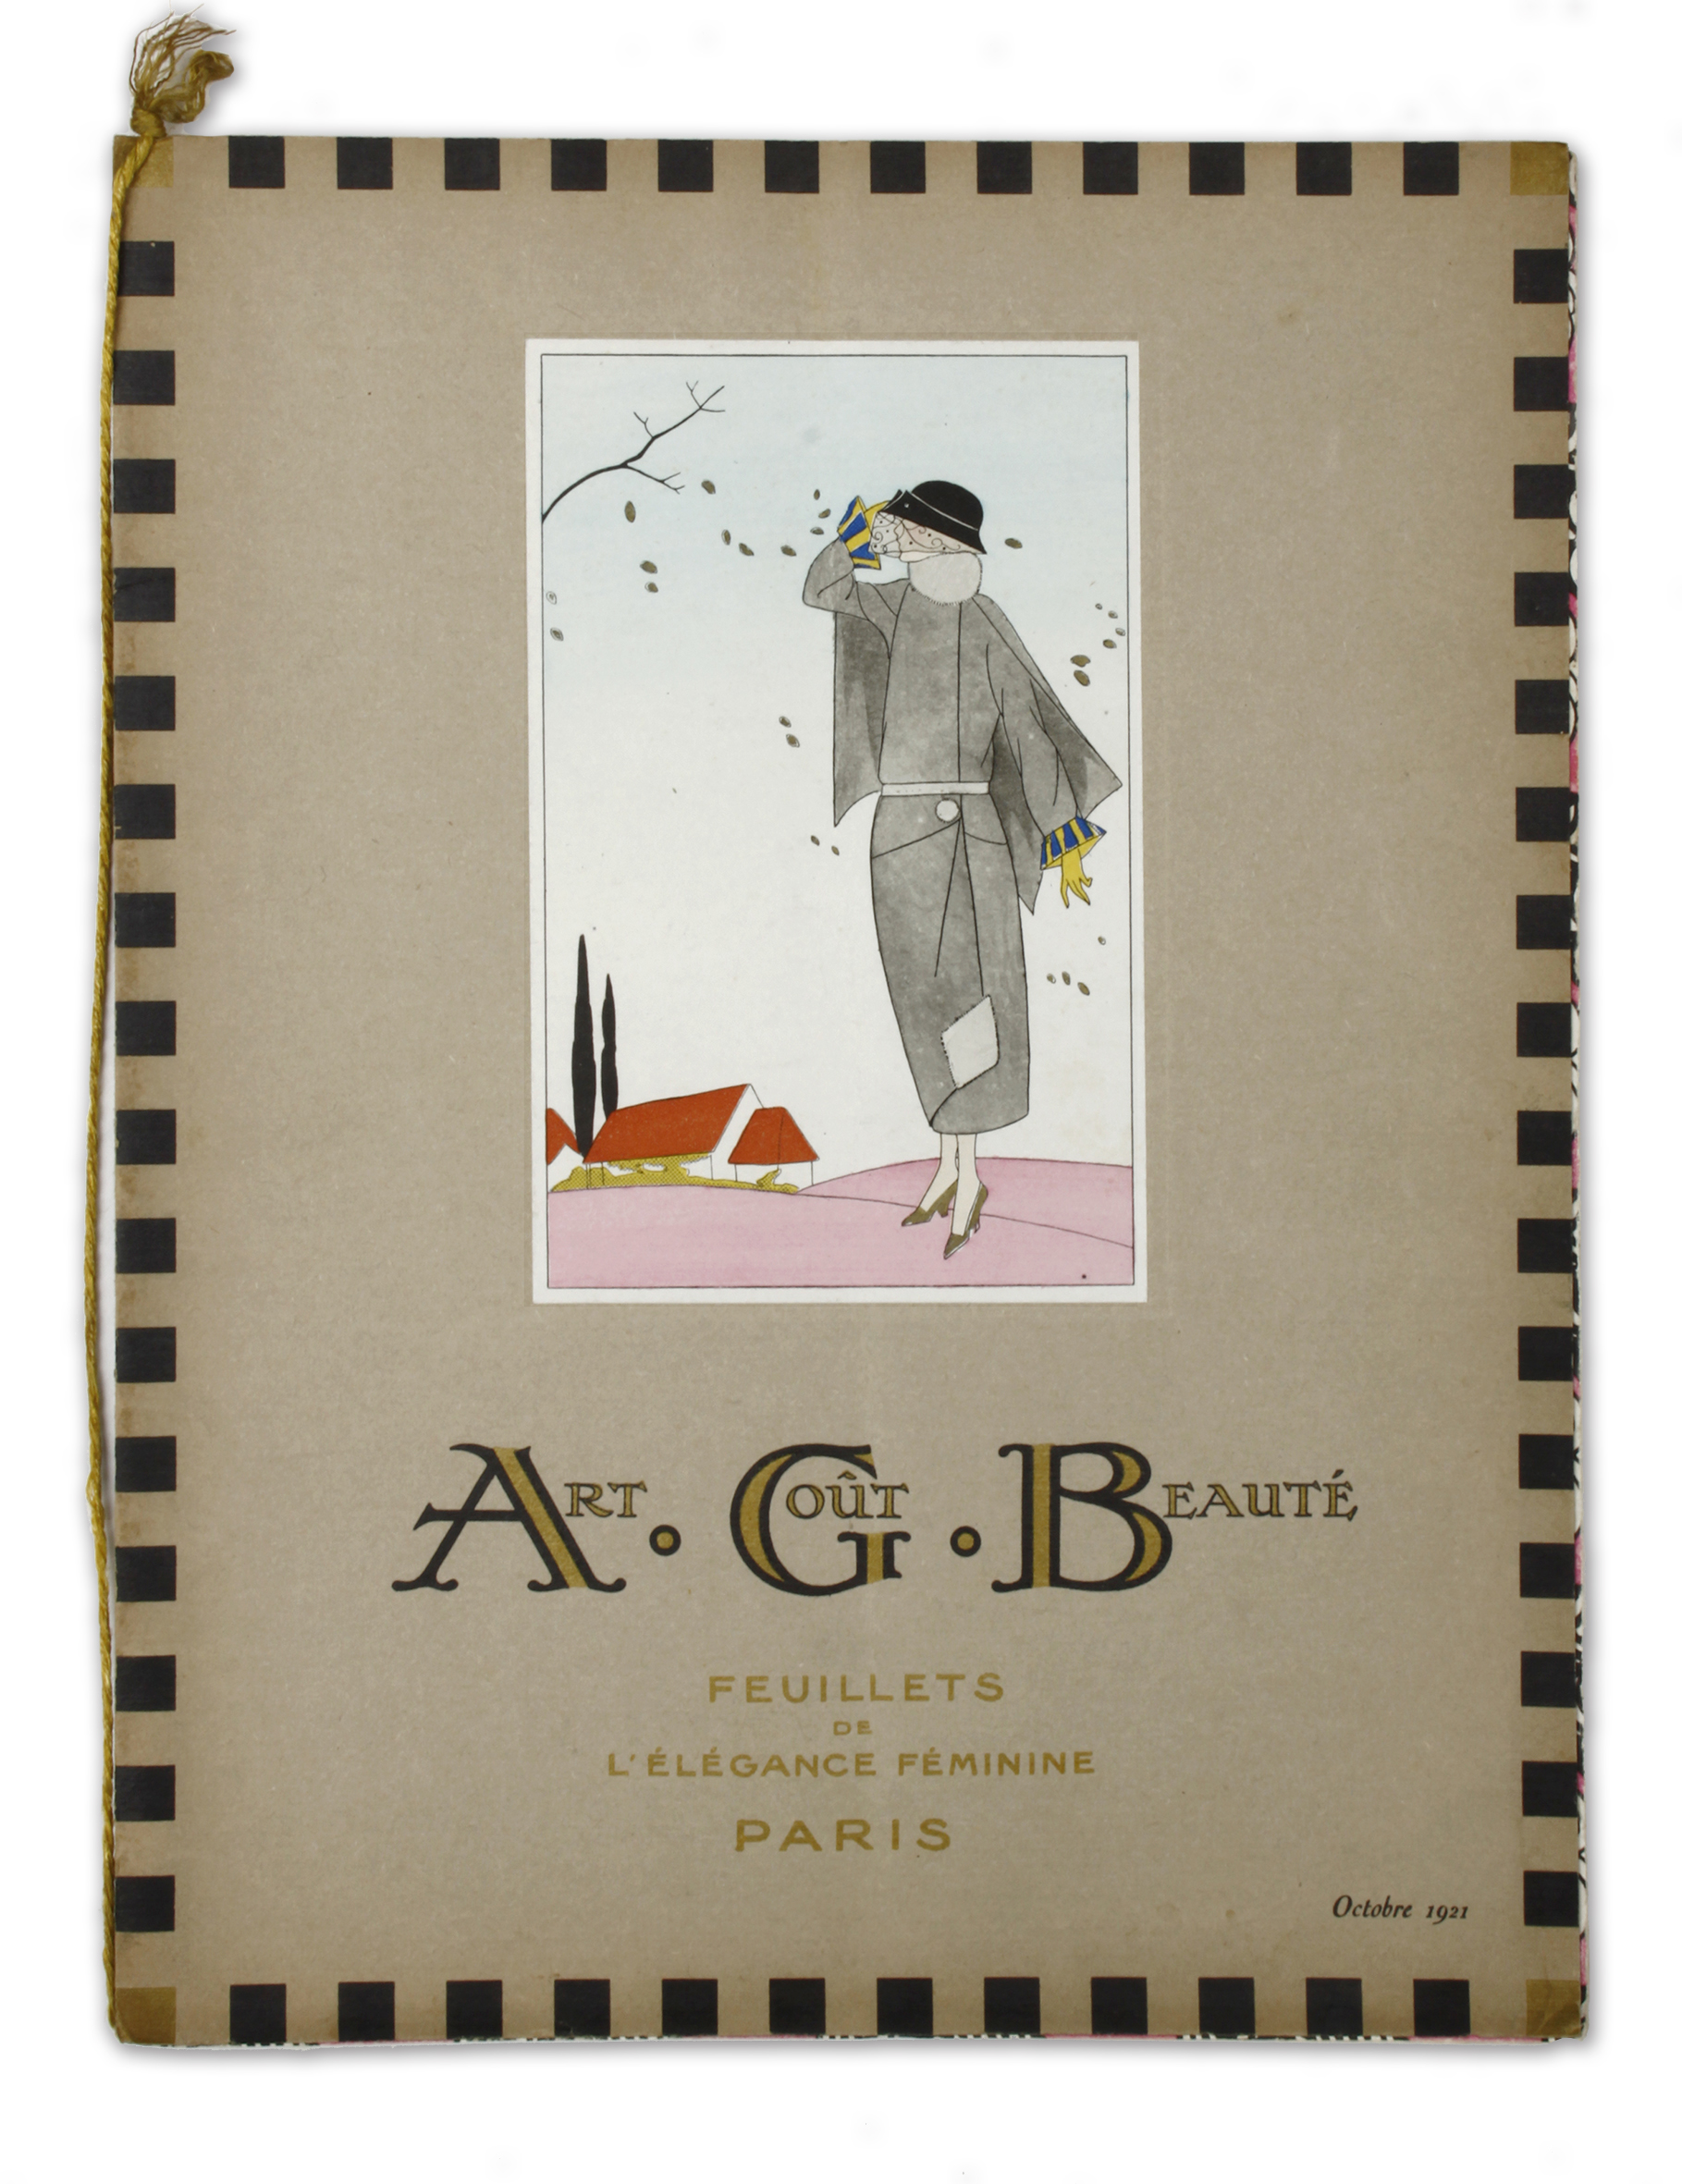 1921 10 - Art Goût Beauté: Feuillets de L’Elegance Feminine [Art - Good Taste & Beauty – Pages of Feminine Elegance] - Antique Book from 1921